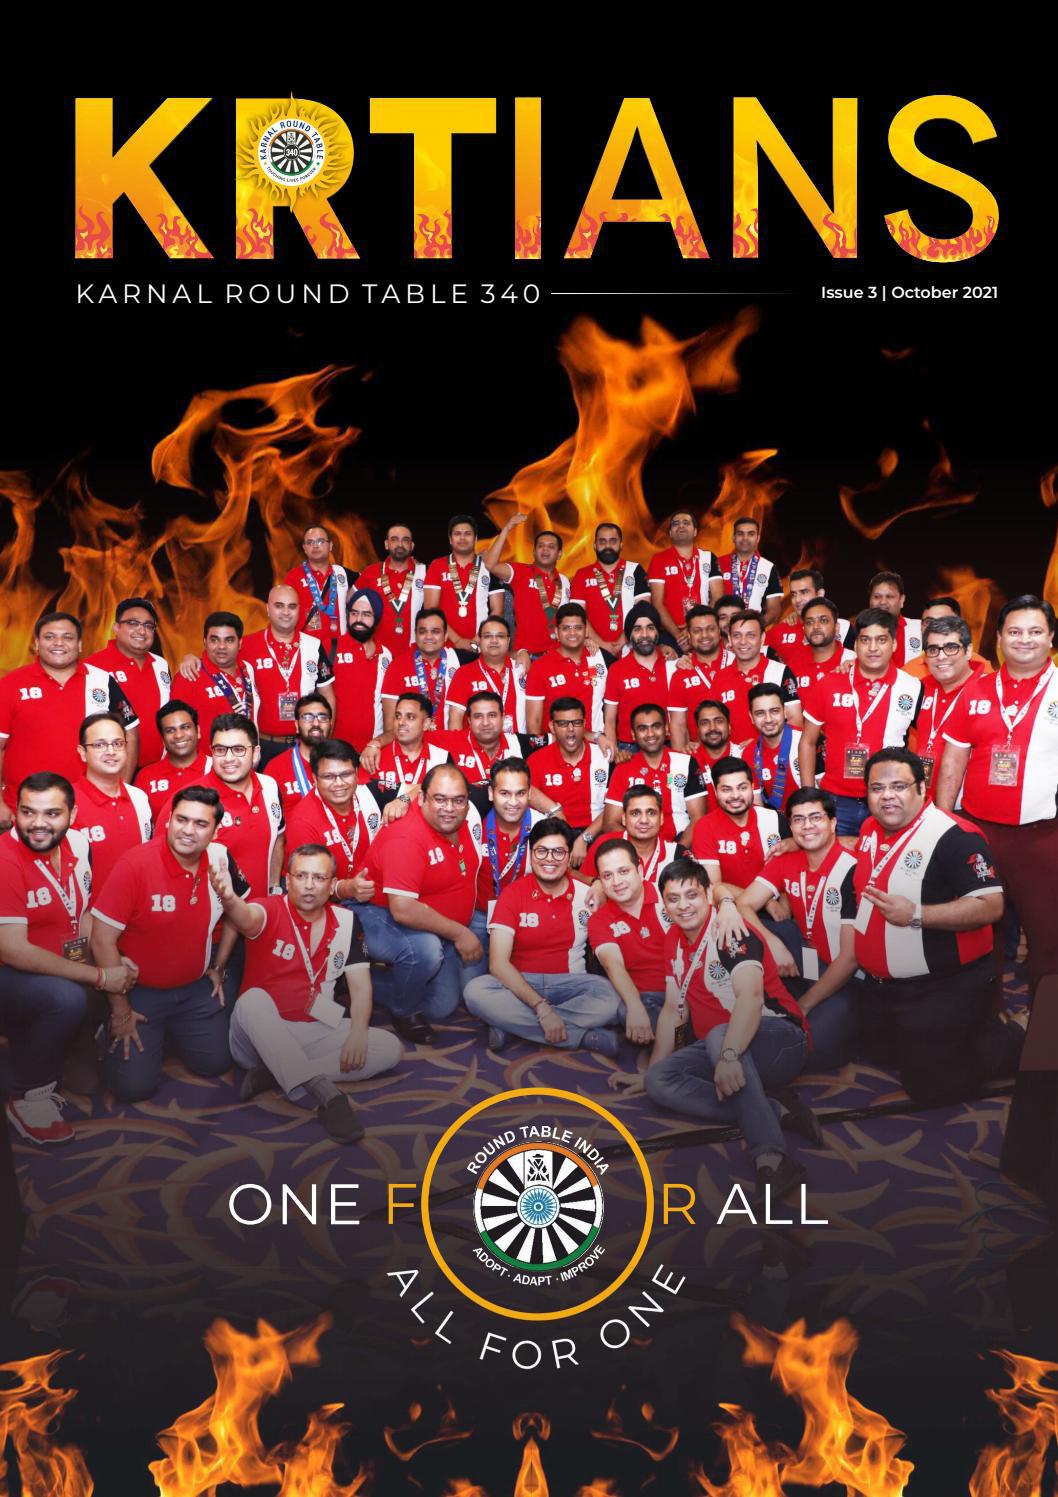 Karnal Round Table 340 - KRTians Magazine - Issue 3 | October 2021